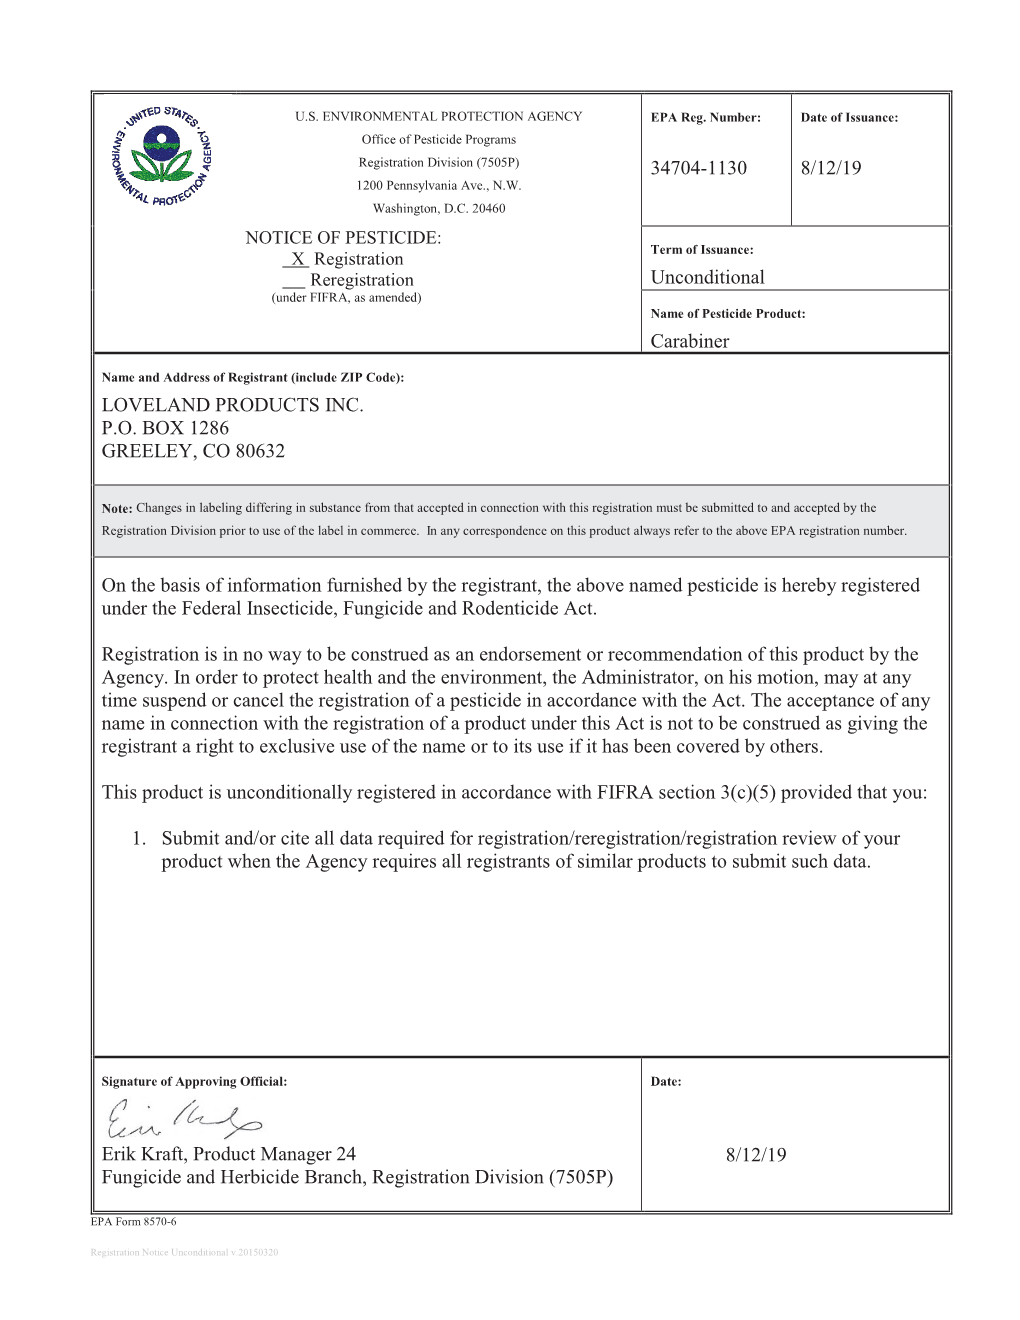 US EPA, Pesticide Product Label, Carabiner,08/12/2019